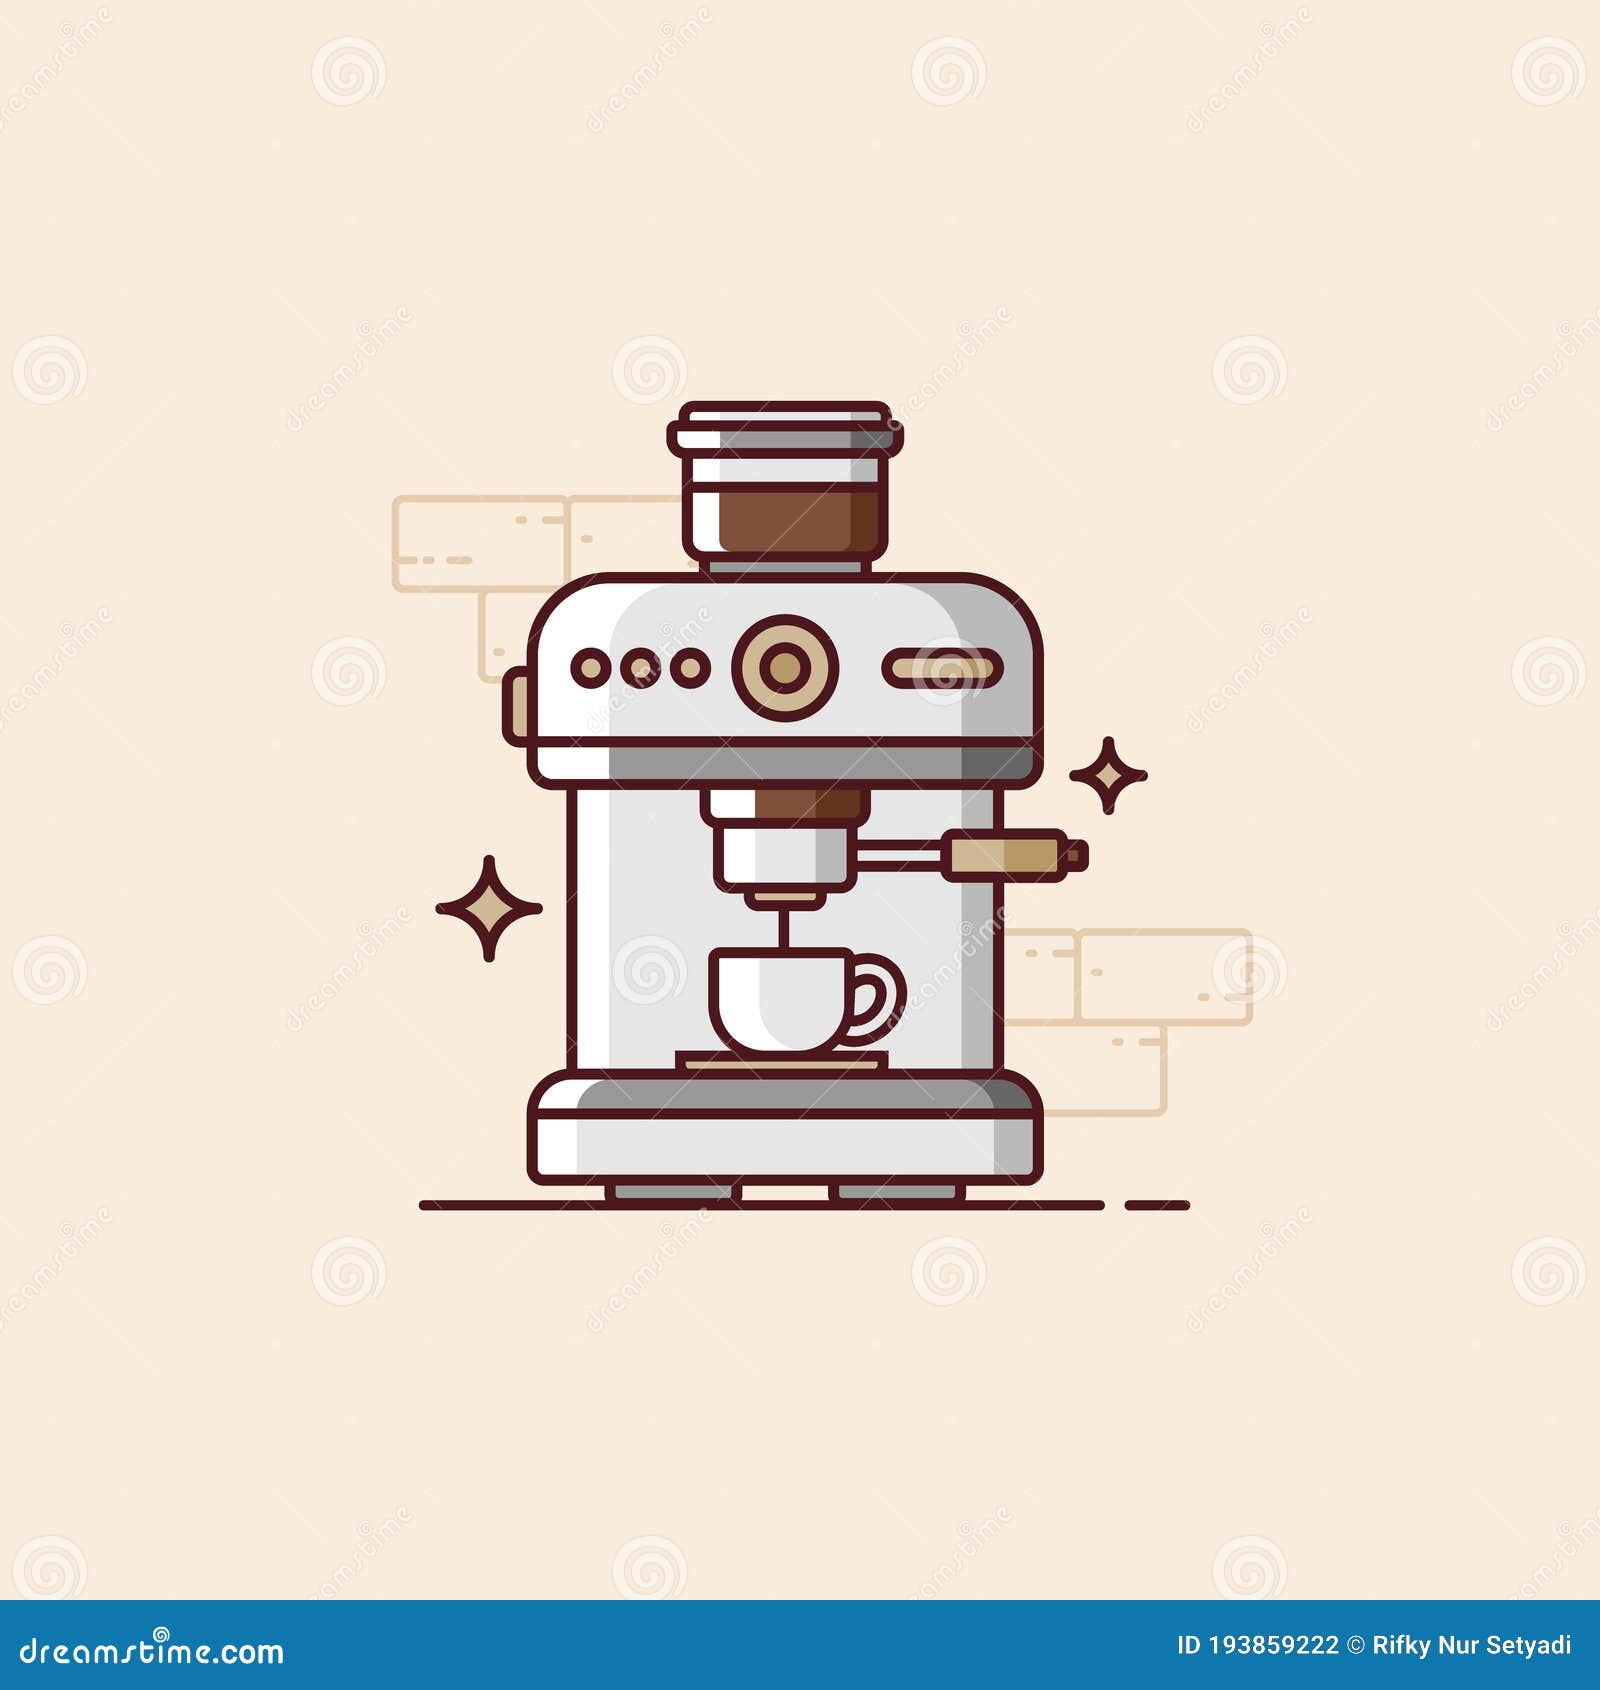 https://thumbs.dreamstime.com/z/espresso-coffee-machine-illustration-flat-style-manual-brewing-shop-icon-design-grinder-pot-bean-mokapot-aero-press-isolated-193859222.jpg